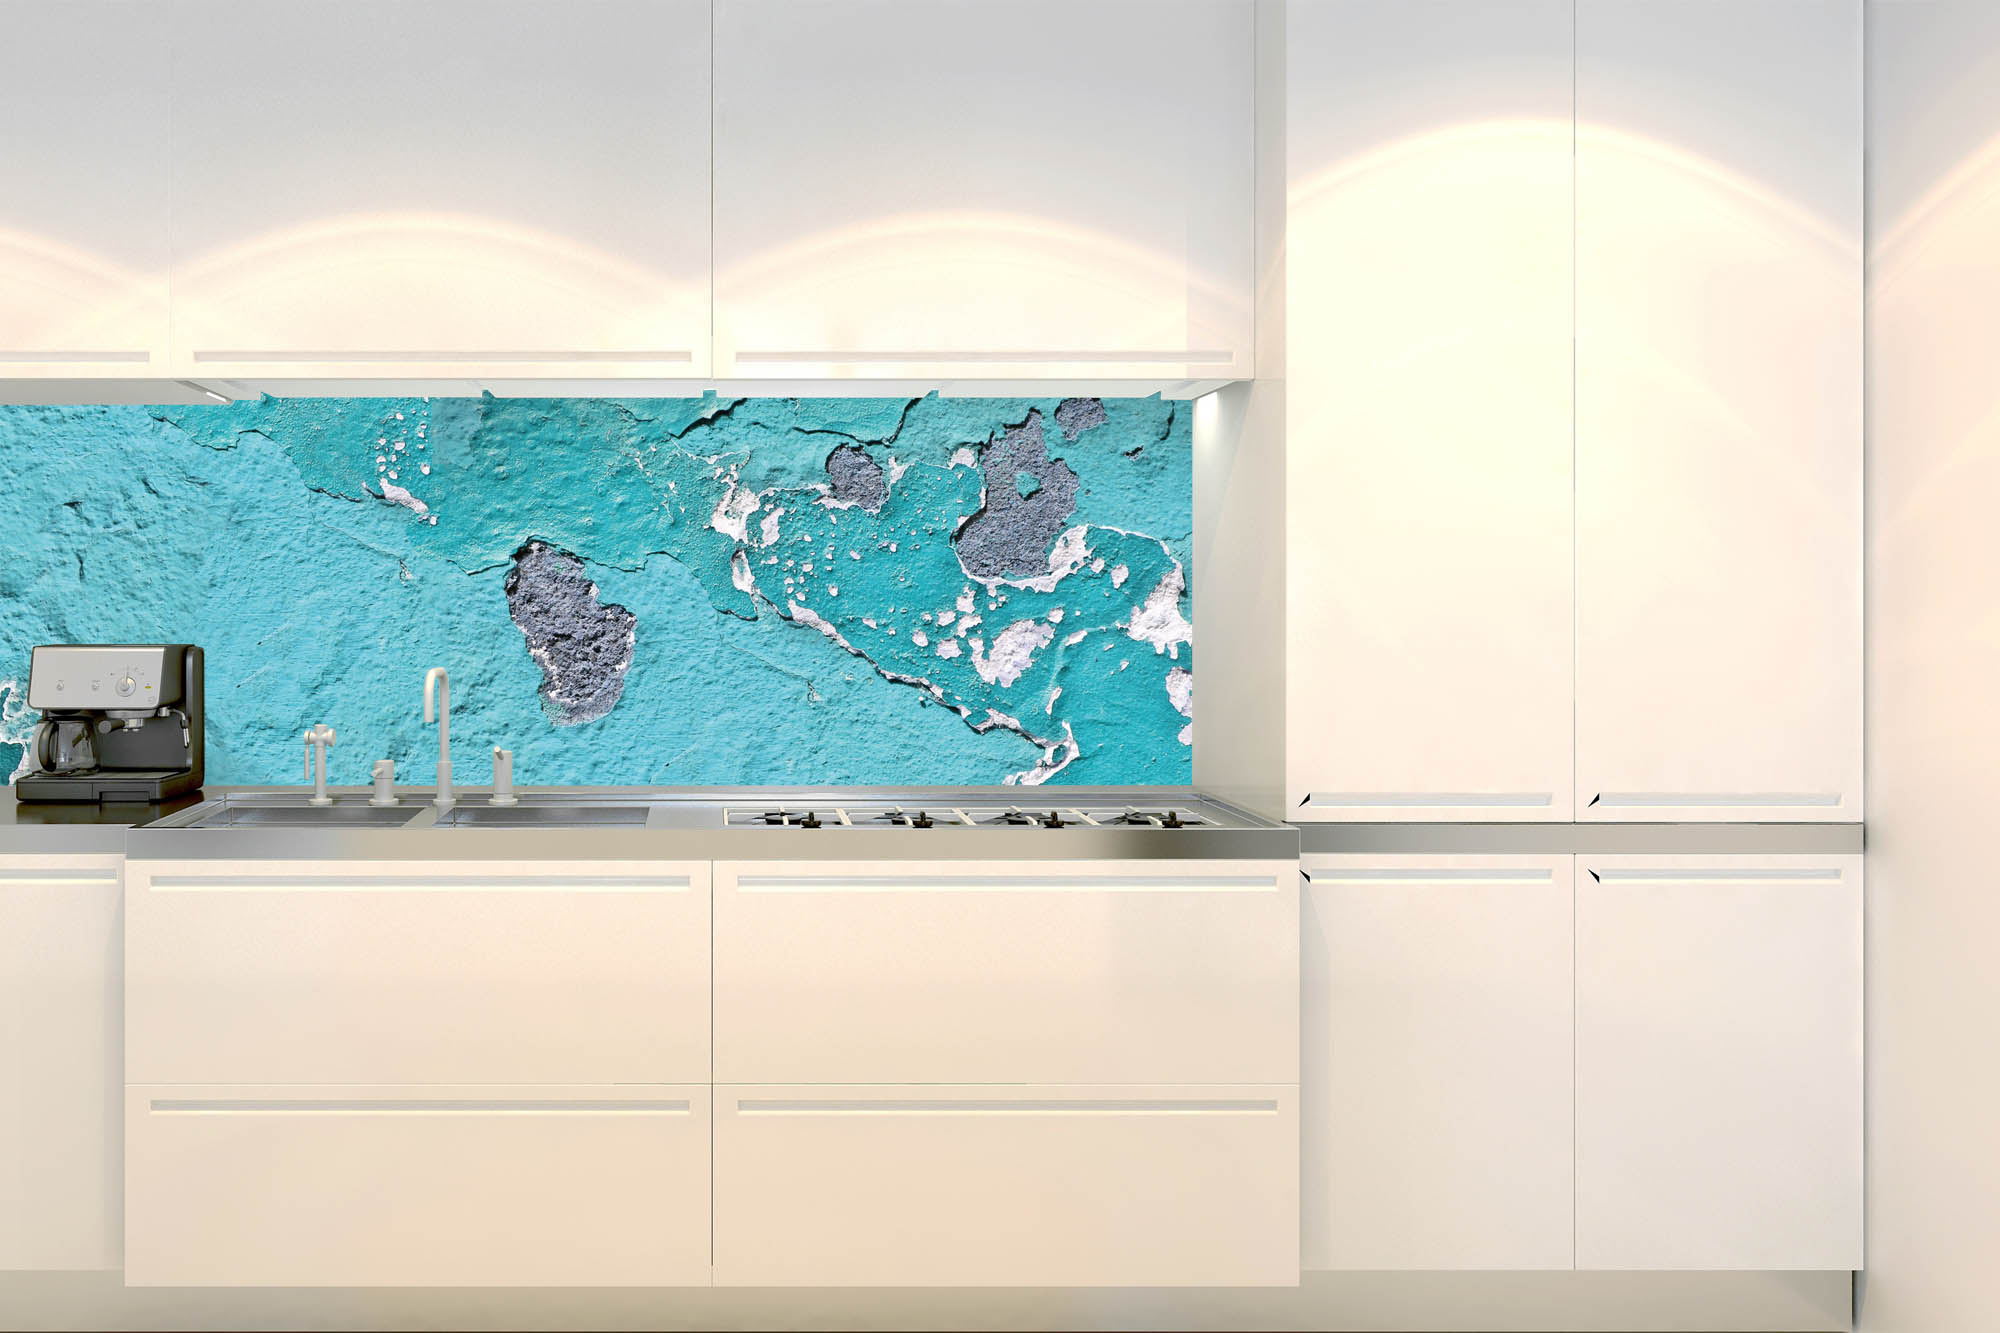 Küchenrückwand Folie - Wand mit abblätternde Farbe 180 x 60 cm